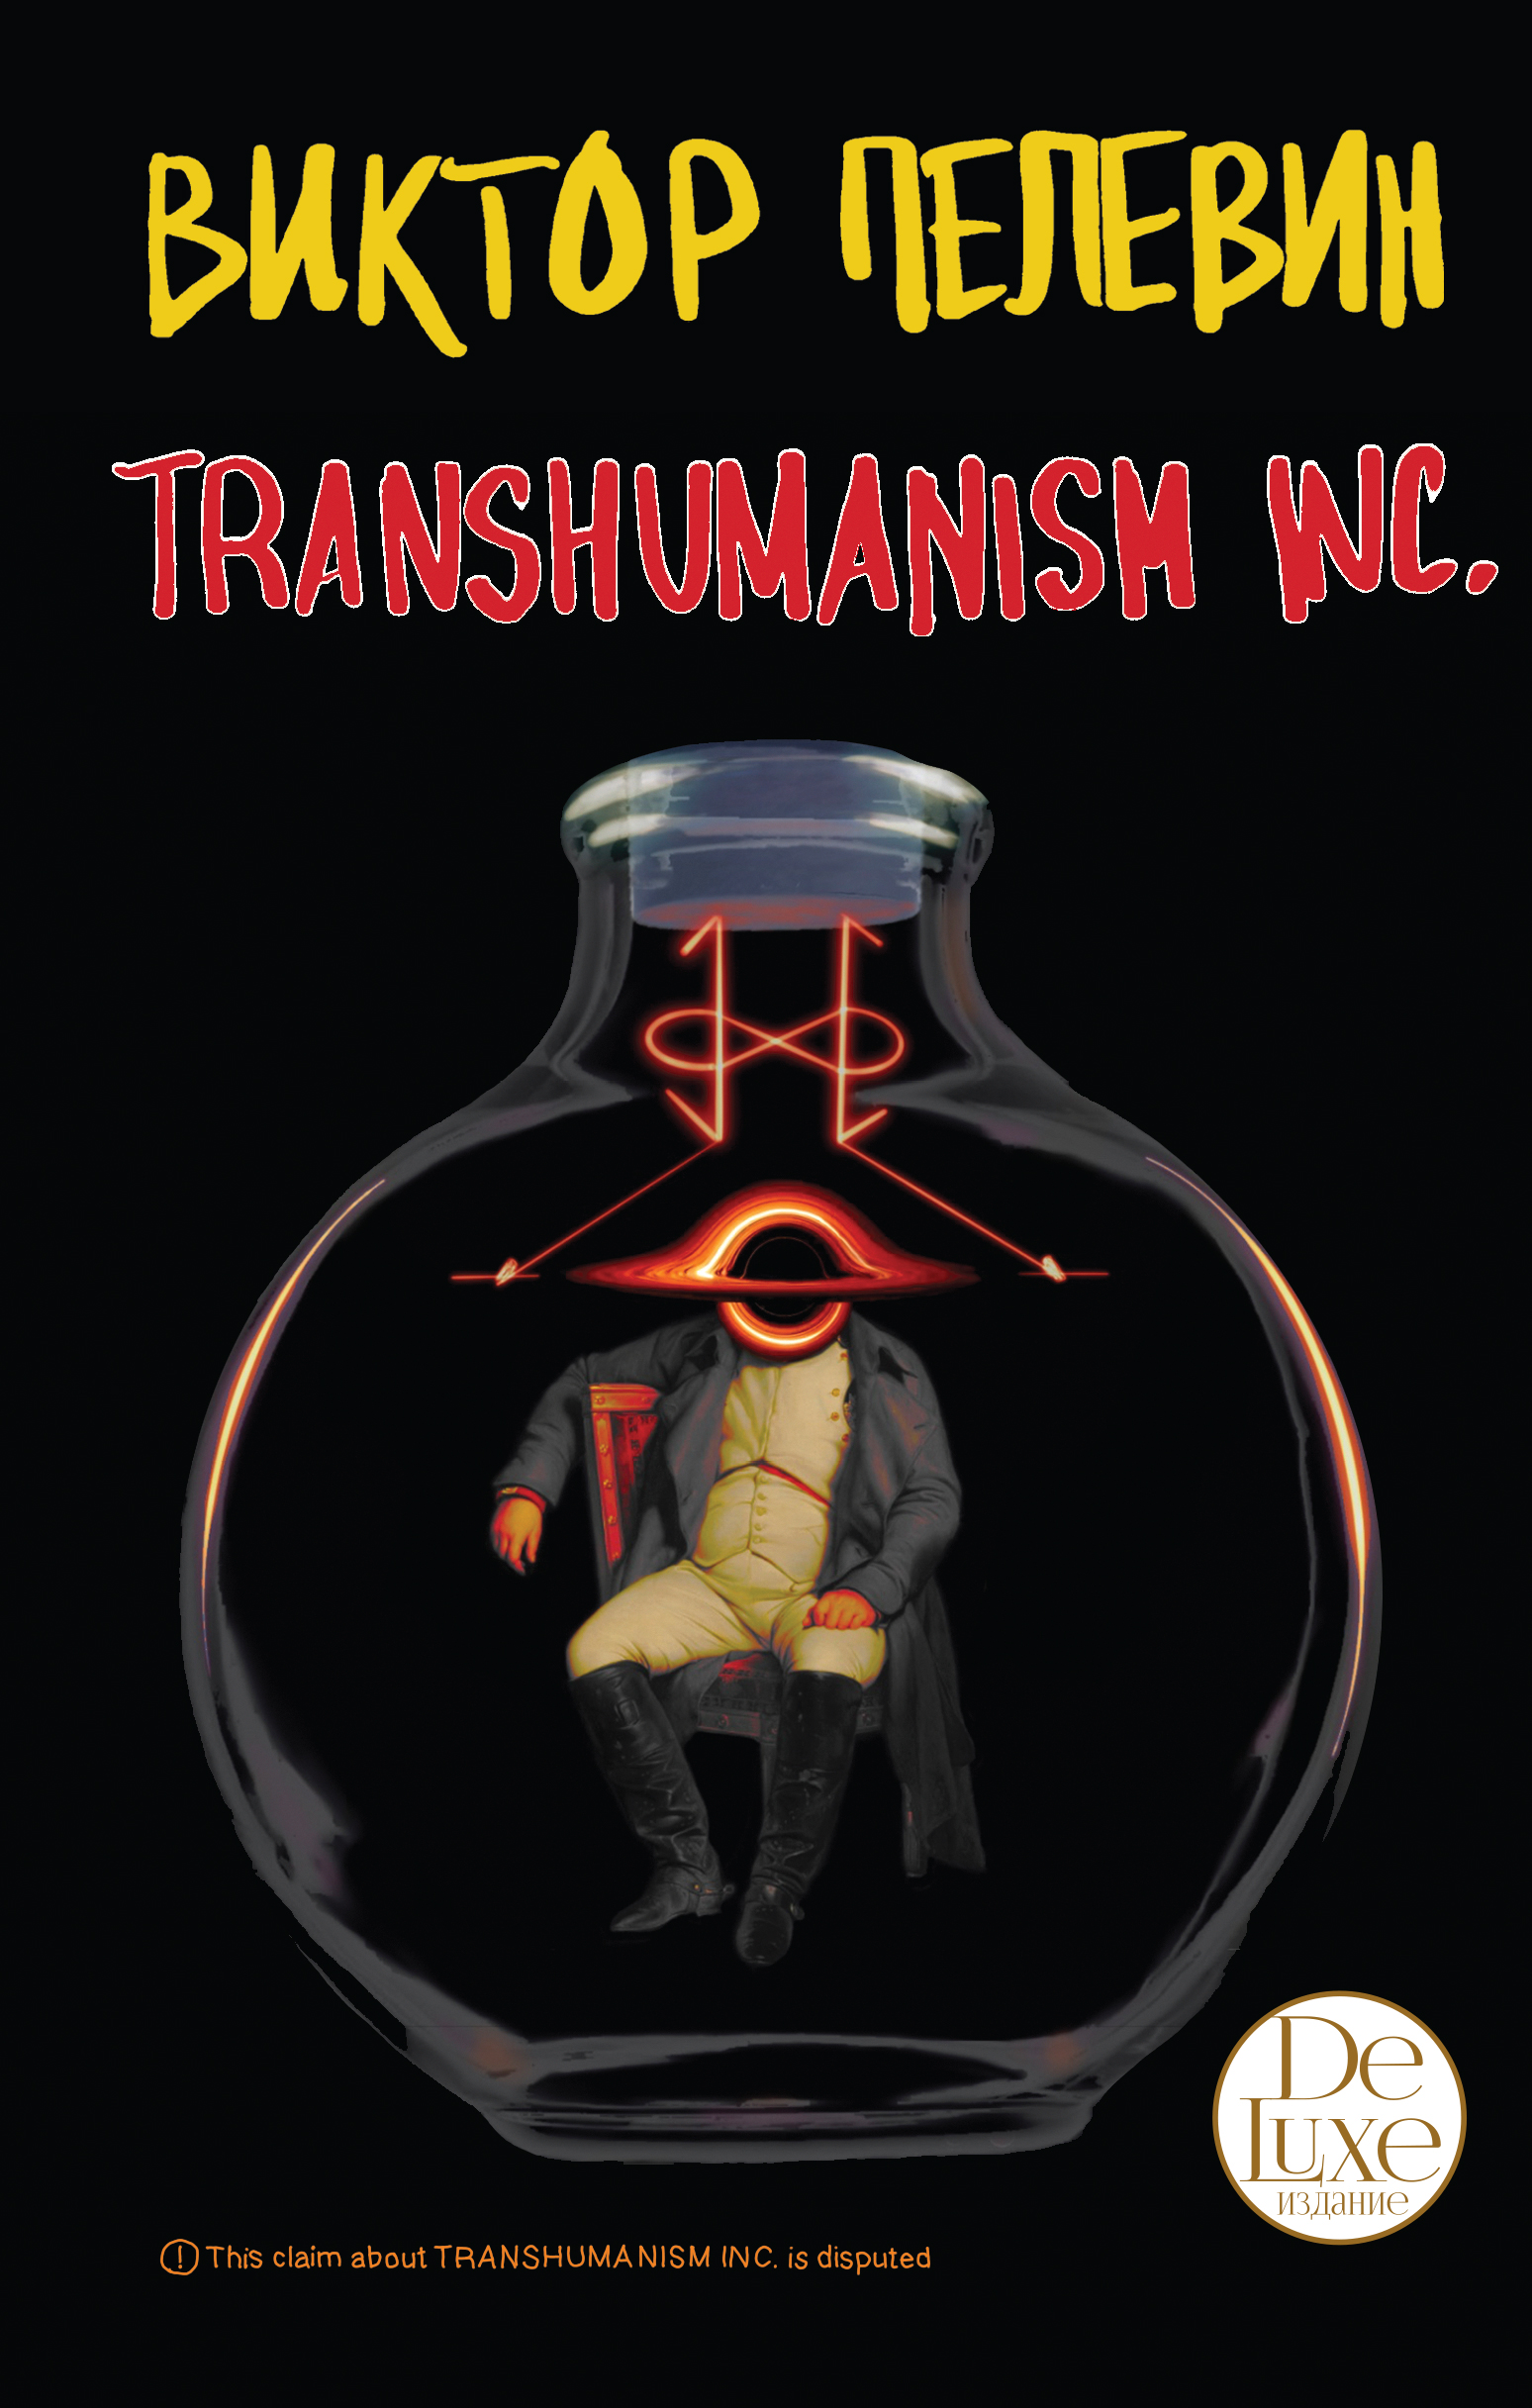  .. Transhumanism inc.   